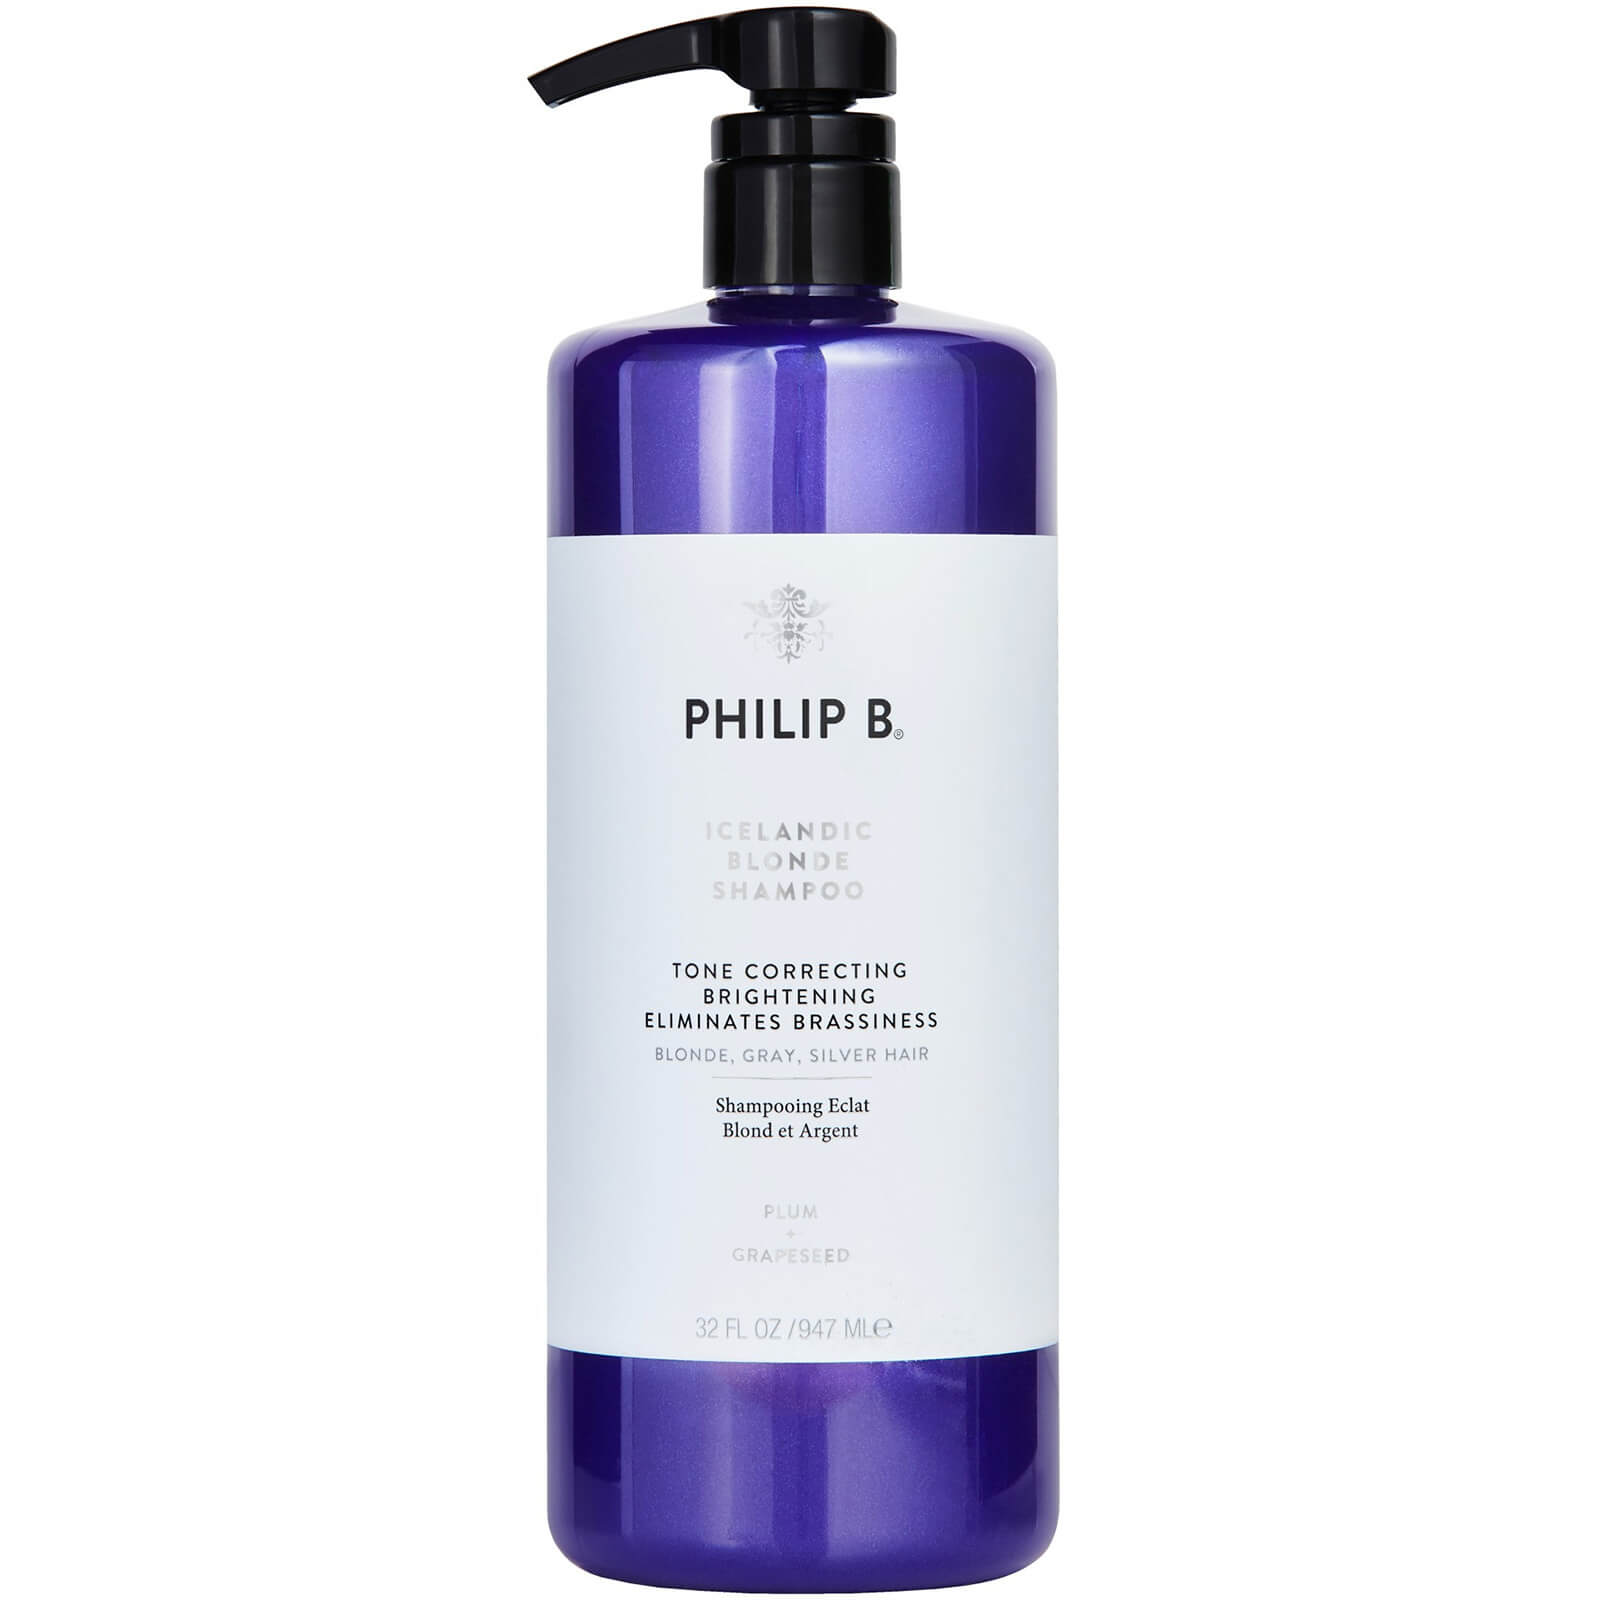 Photos - Hair Product Philip B Icelandic Blonde Shampoo 32 fl oz/947ml 79947